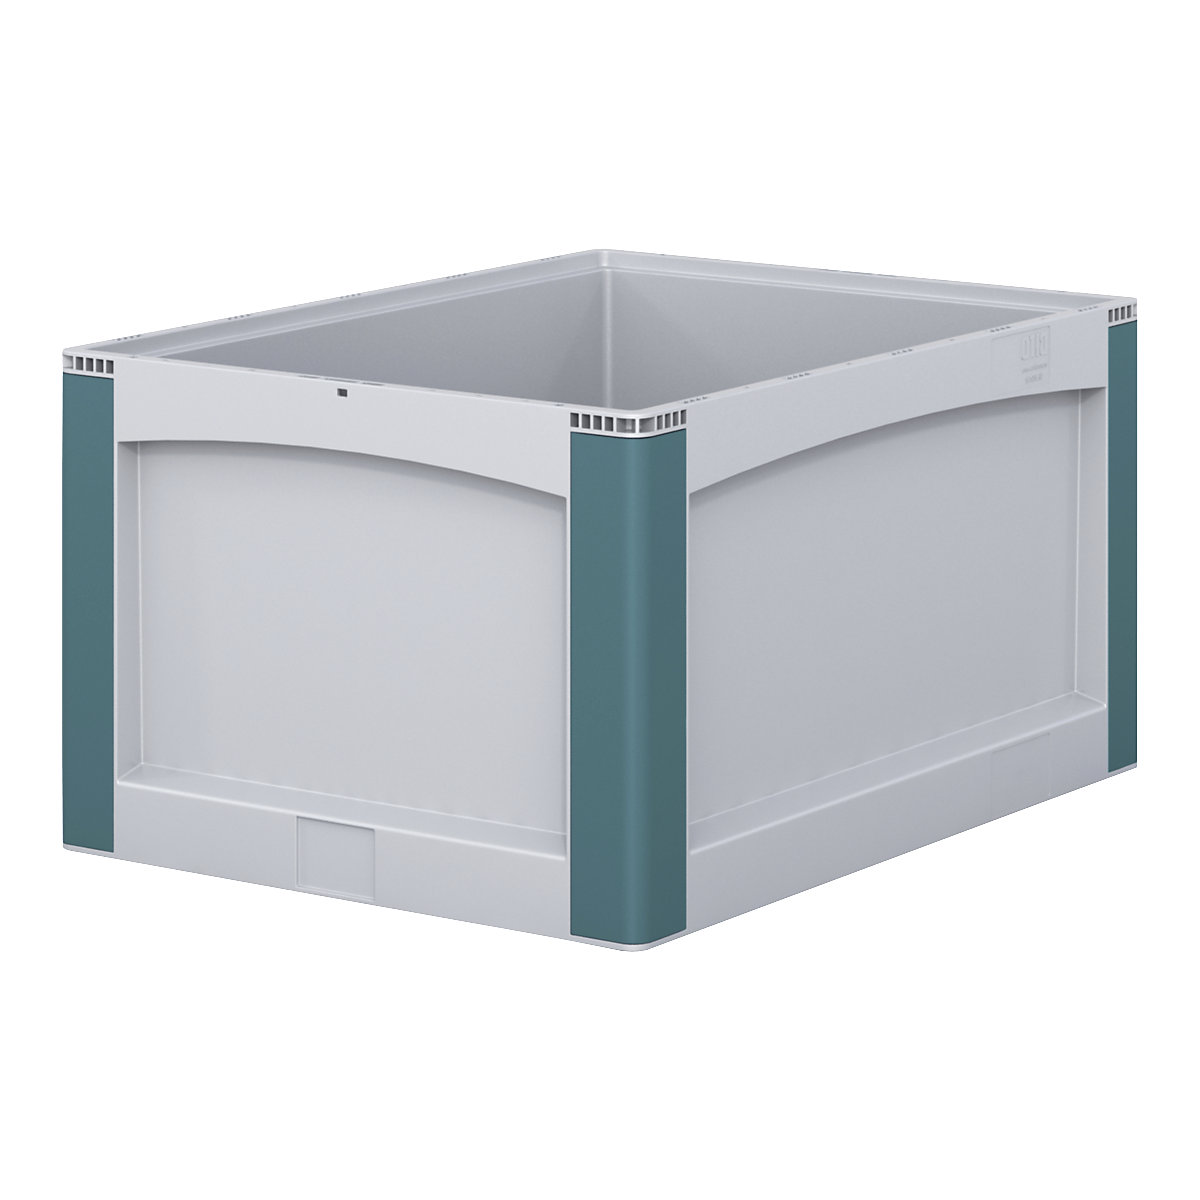 SL heavy duty container – BITO